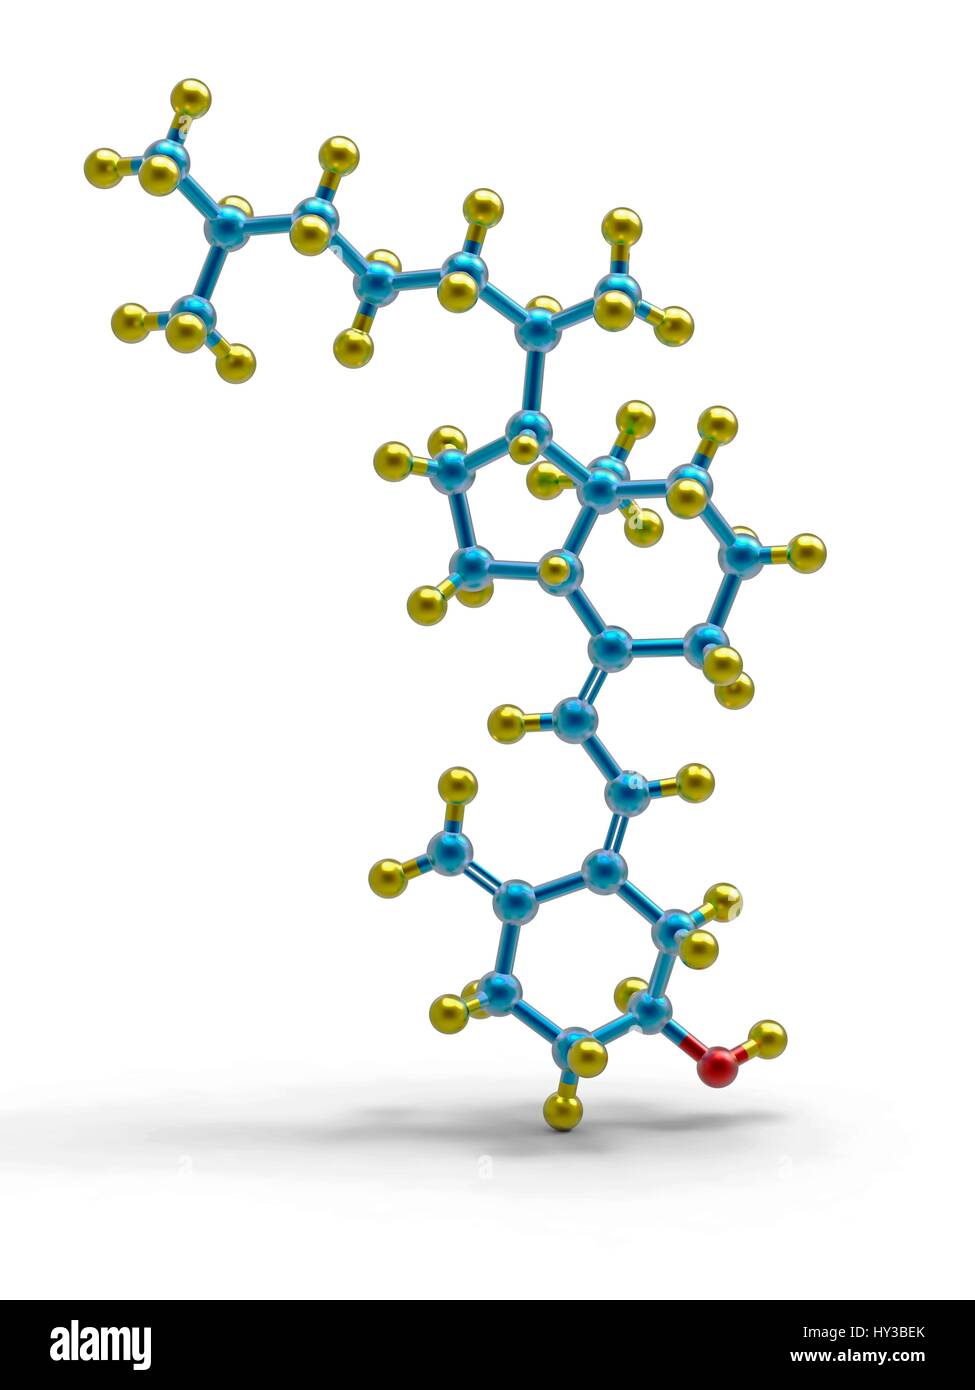 A Molecular Model Of Vitamin D3 Cholecalciferol A Form Of